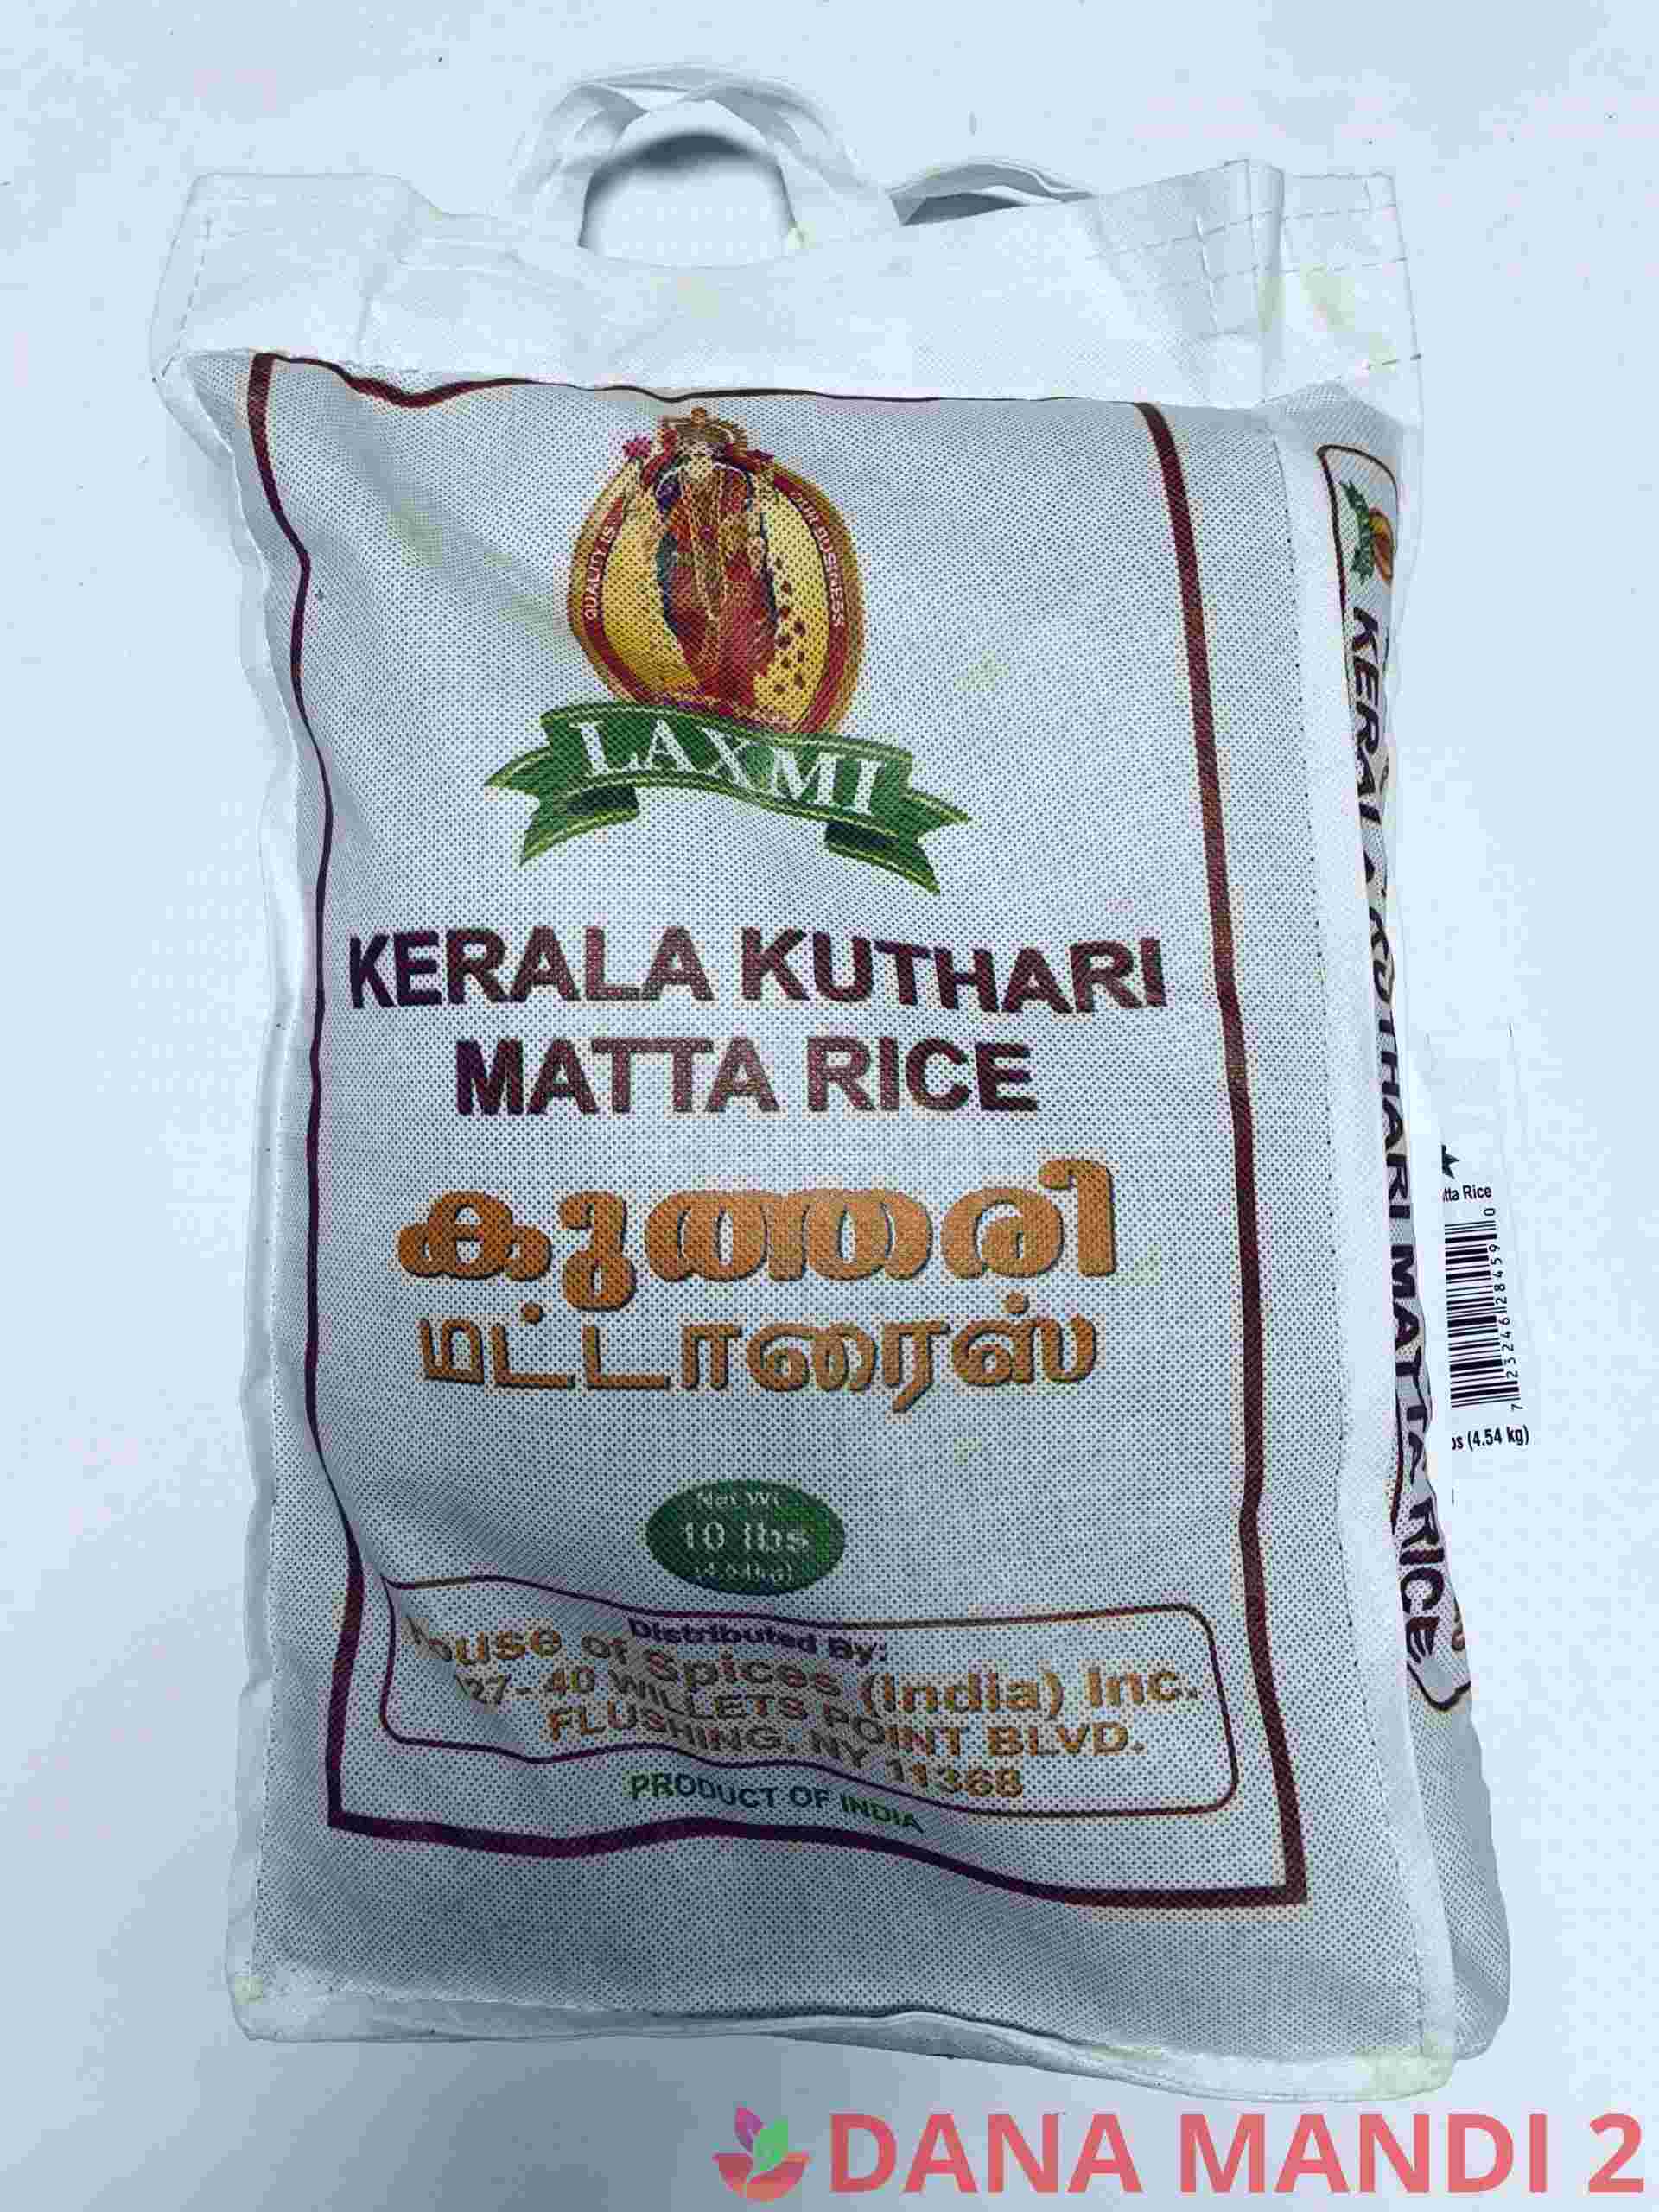 Laxmi Kerala Kuthari Matta Rice